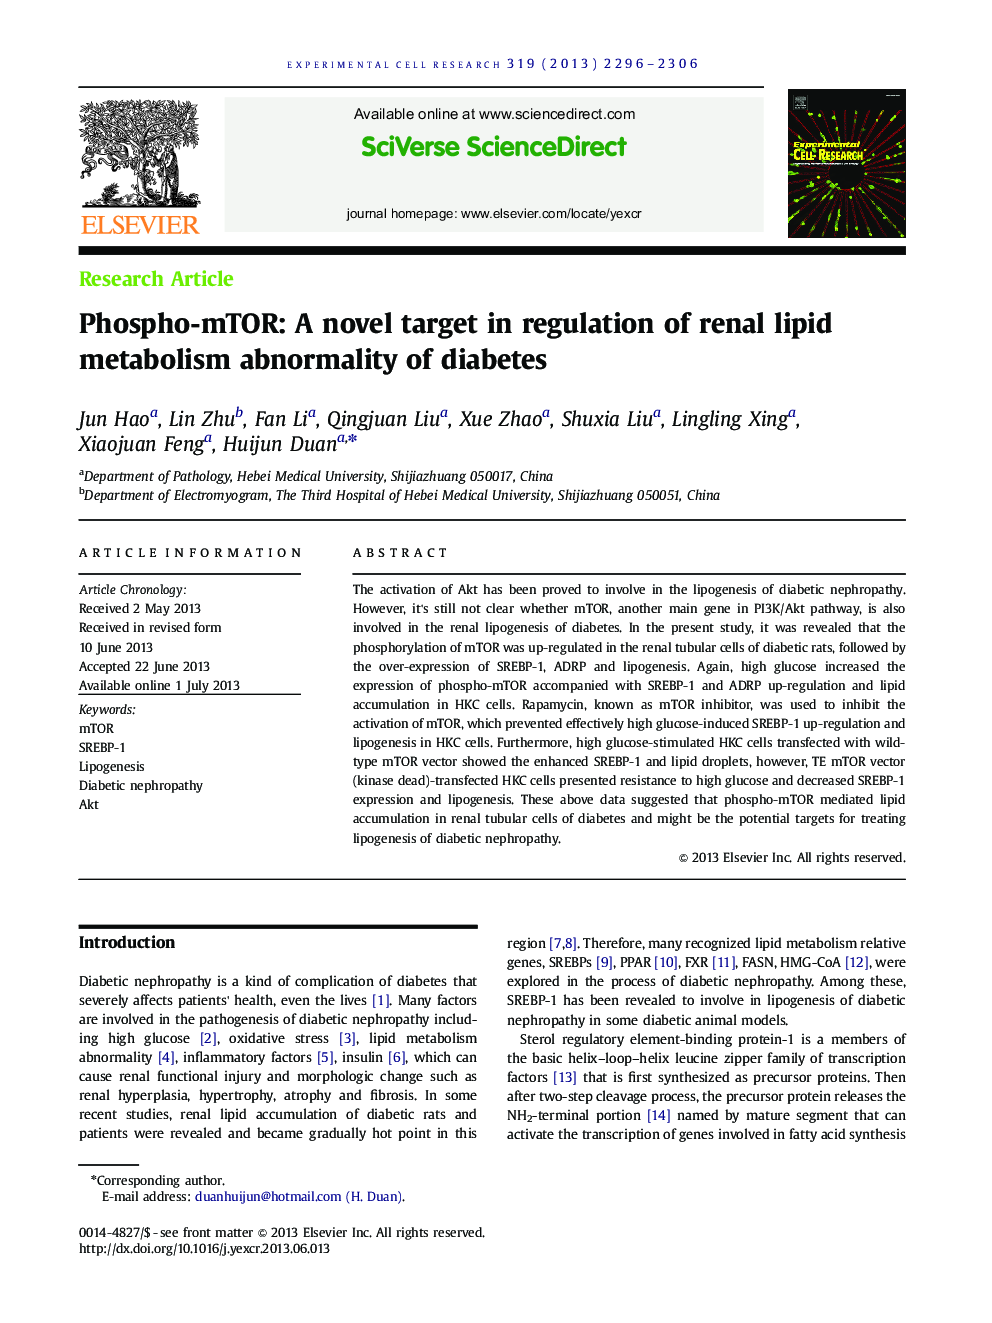 Phospho-mTOR: A novel target in regulation of renal lipid metabolism abnormality of diabetes